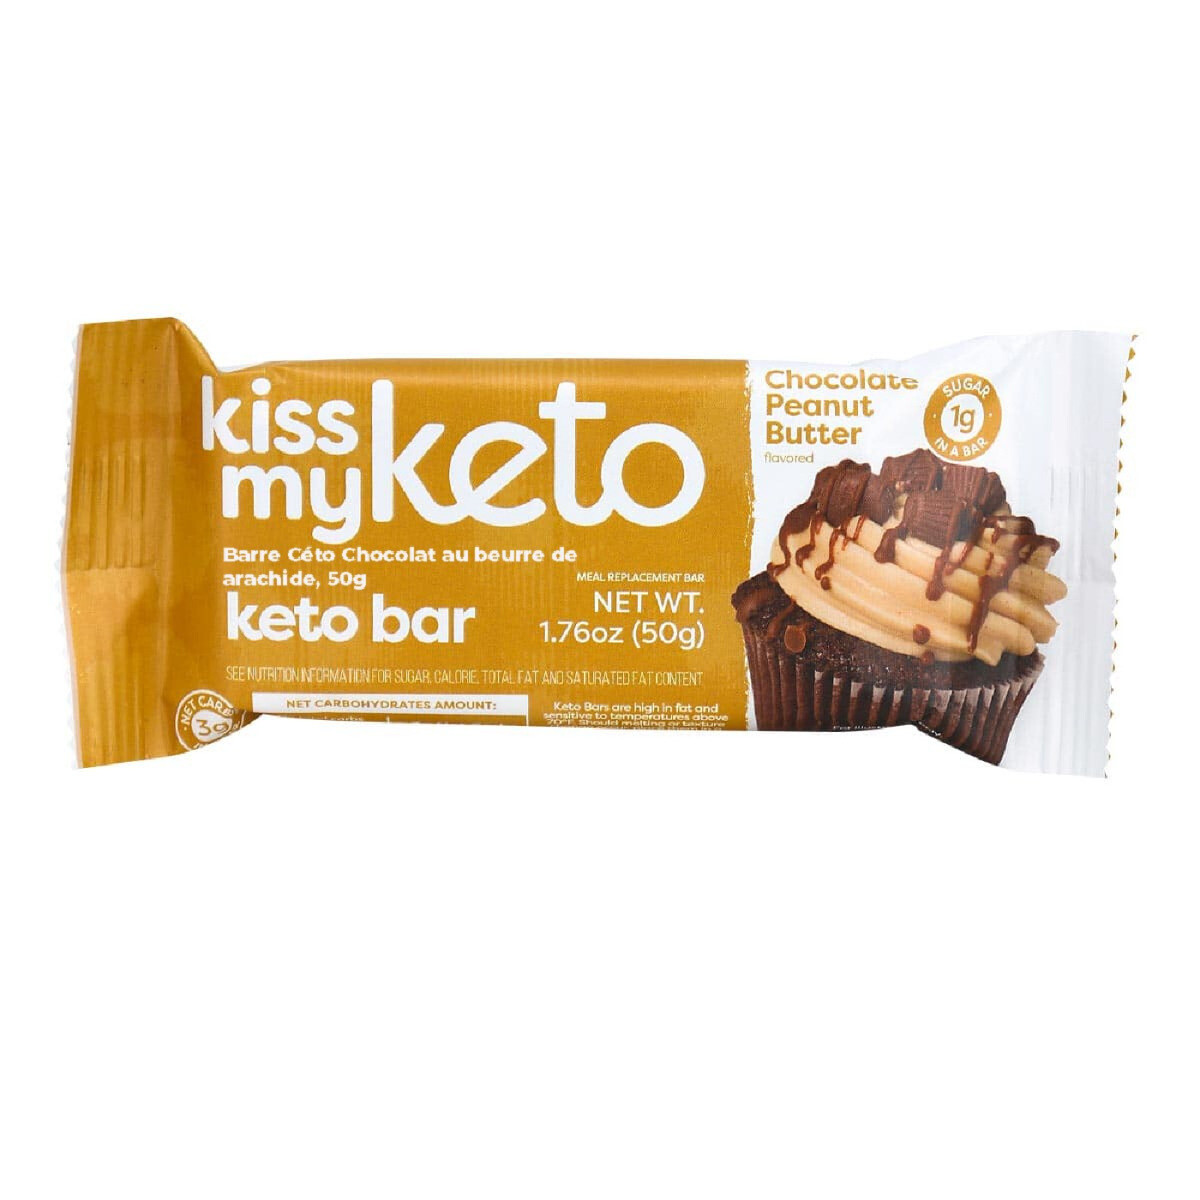 Kiss My Keto Chocolate Peanut Butter Bar